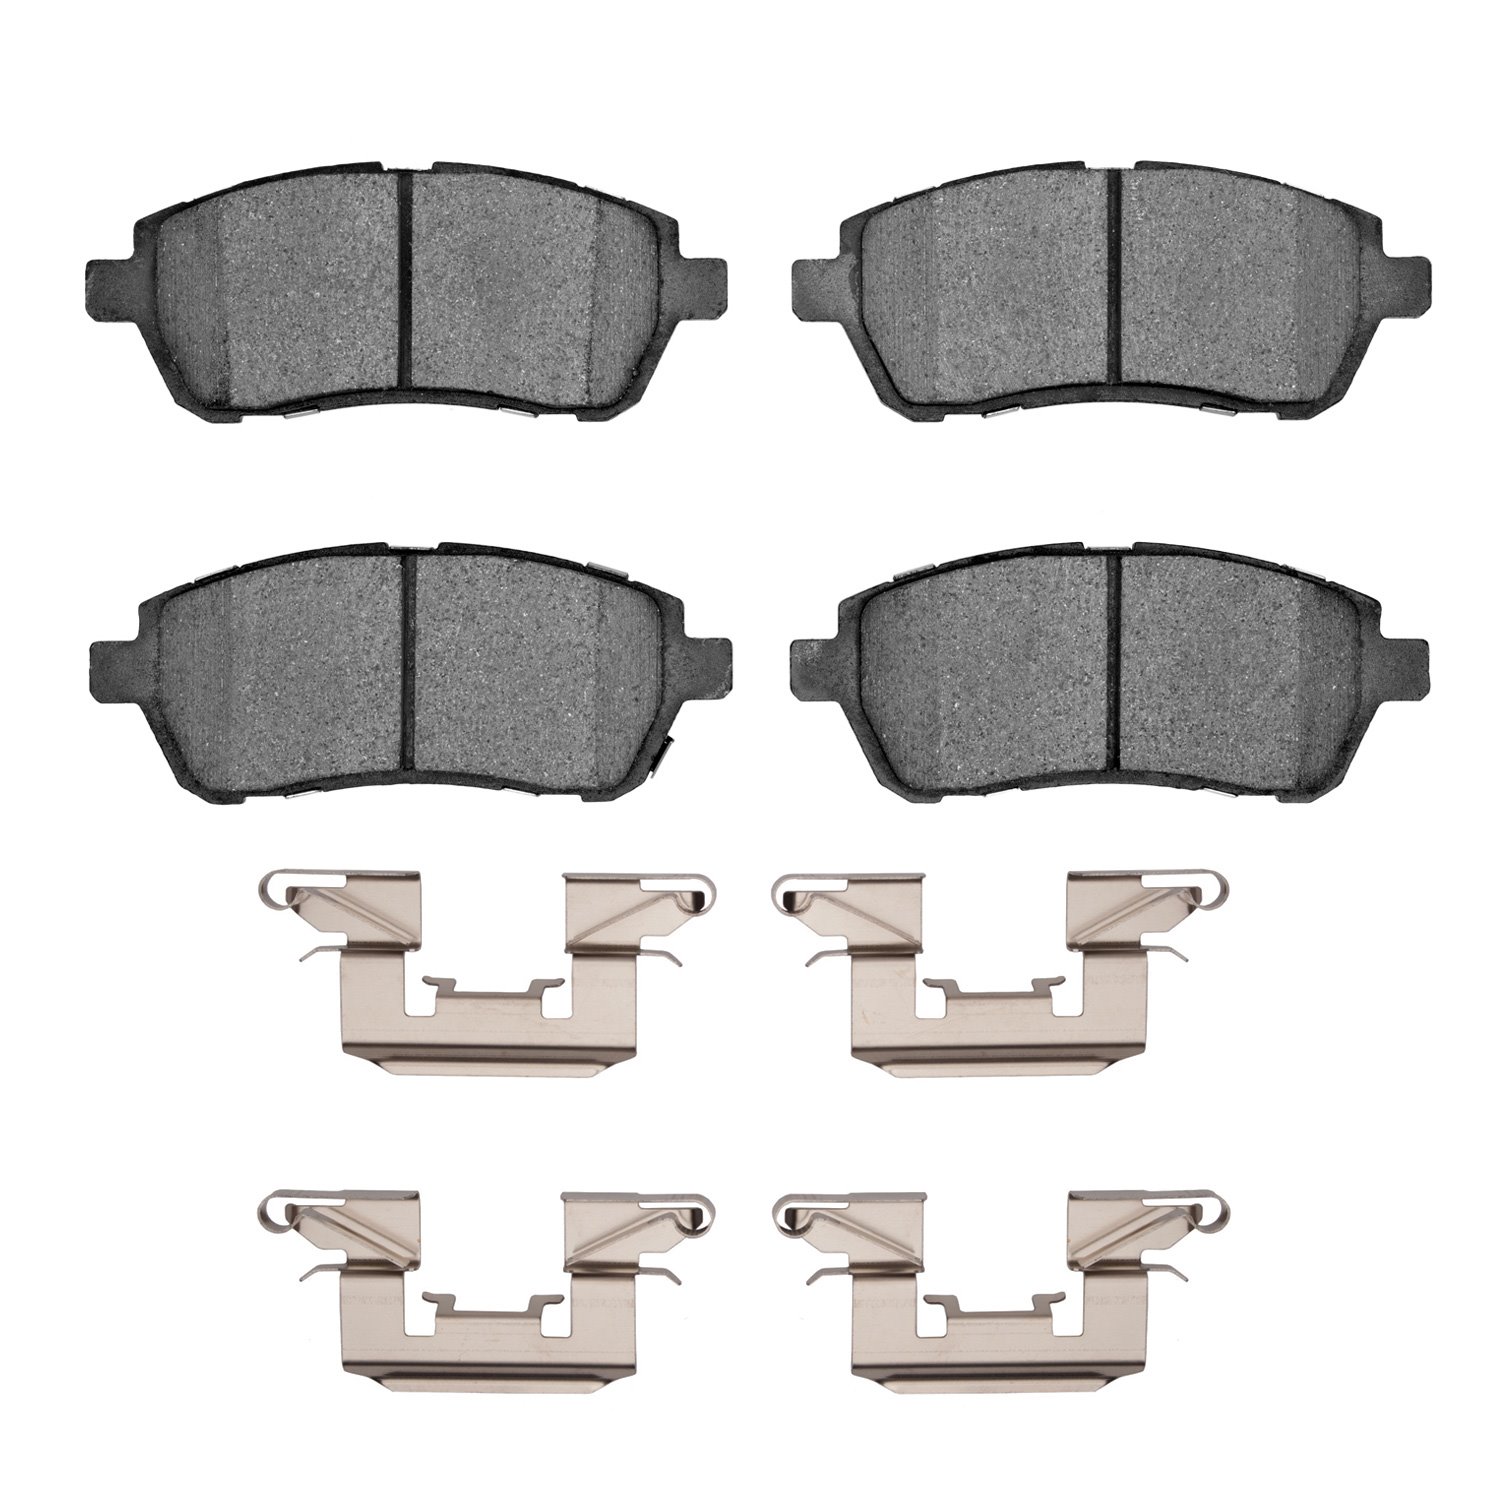 1310-1454-11 3000-Series Ceramic Brake Pads & Hardware Kit, 2011-2015 Ford/Lincoln/Mercury/Mazda, Position: Front